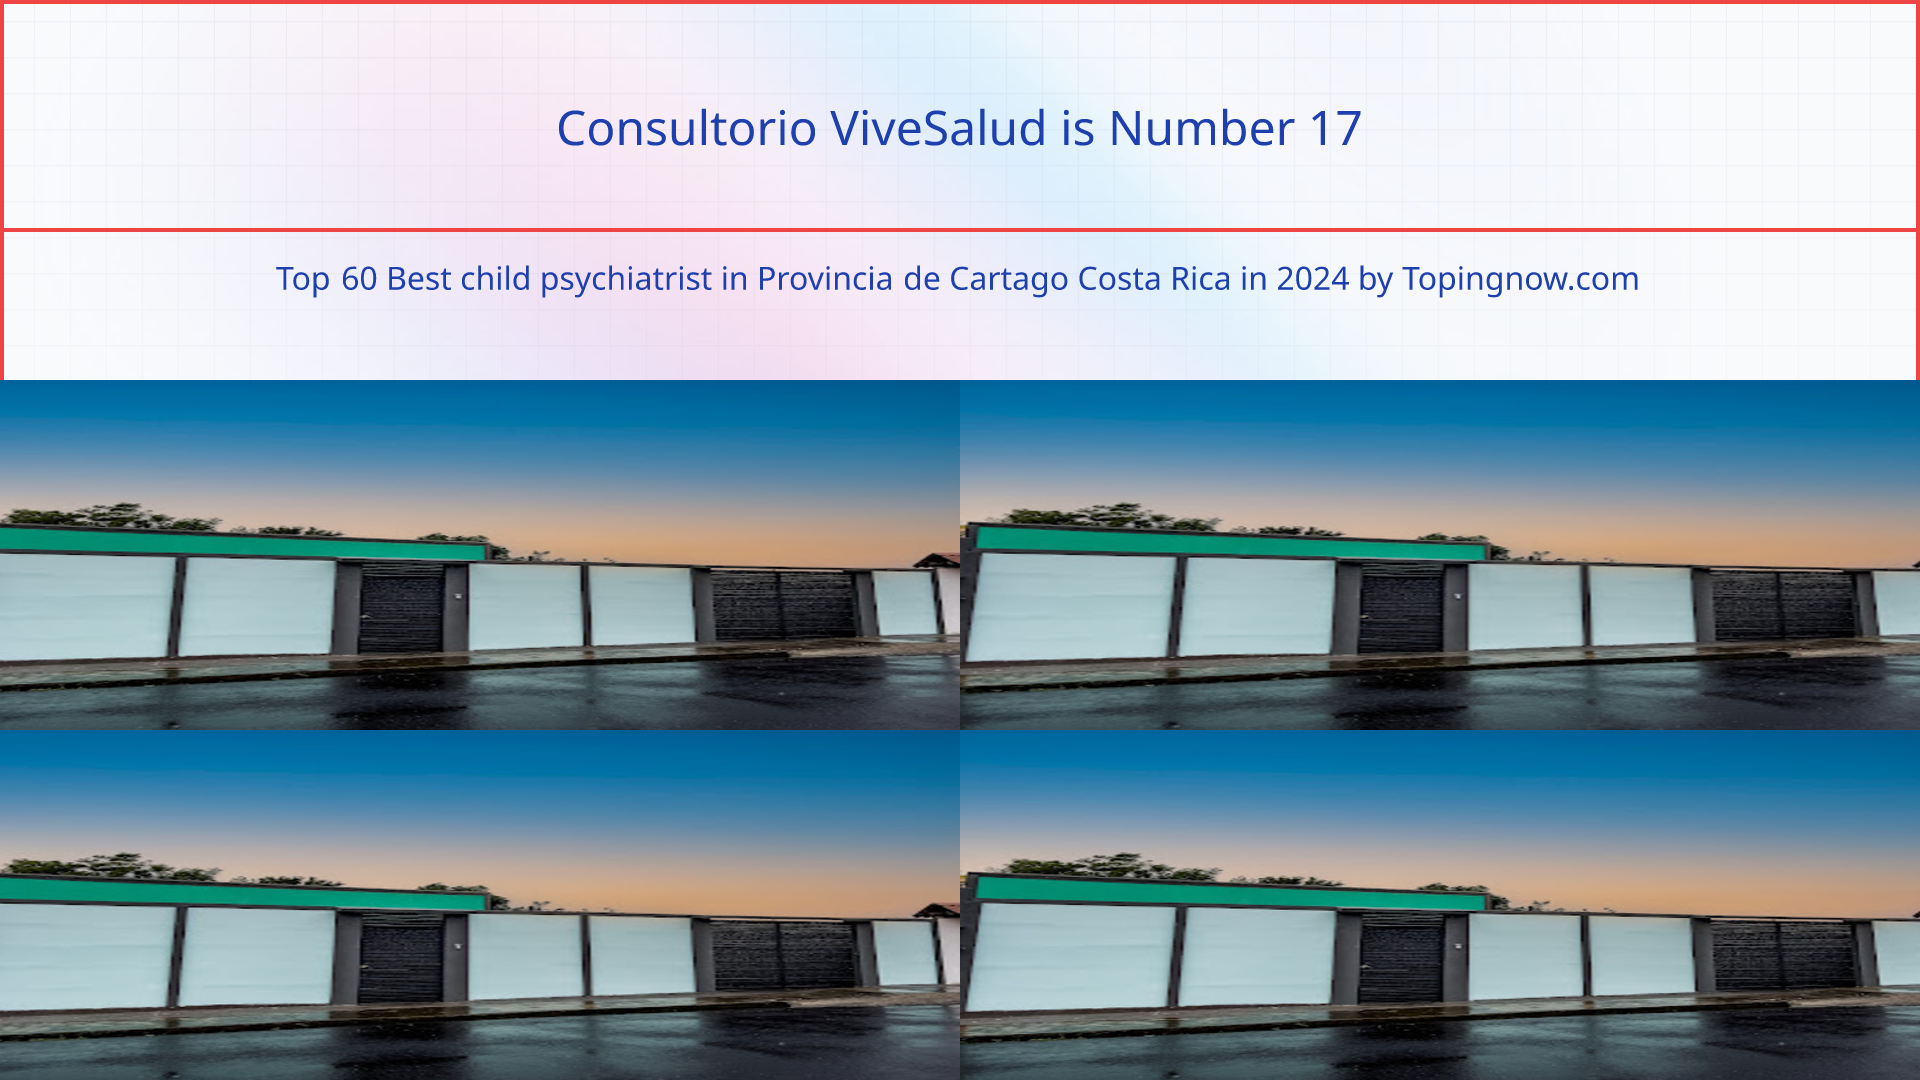 Consultorio ViveSalud: Top 60 Best child psychiatrist in Provincia de Cartago Costa Rica in 2024